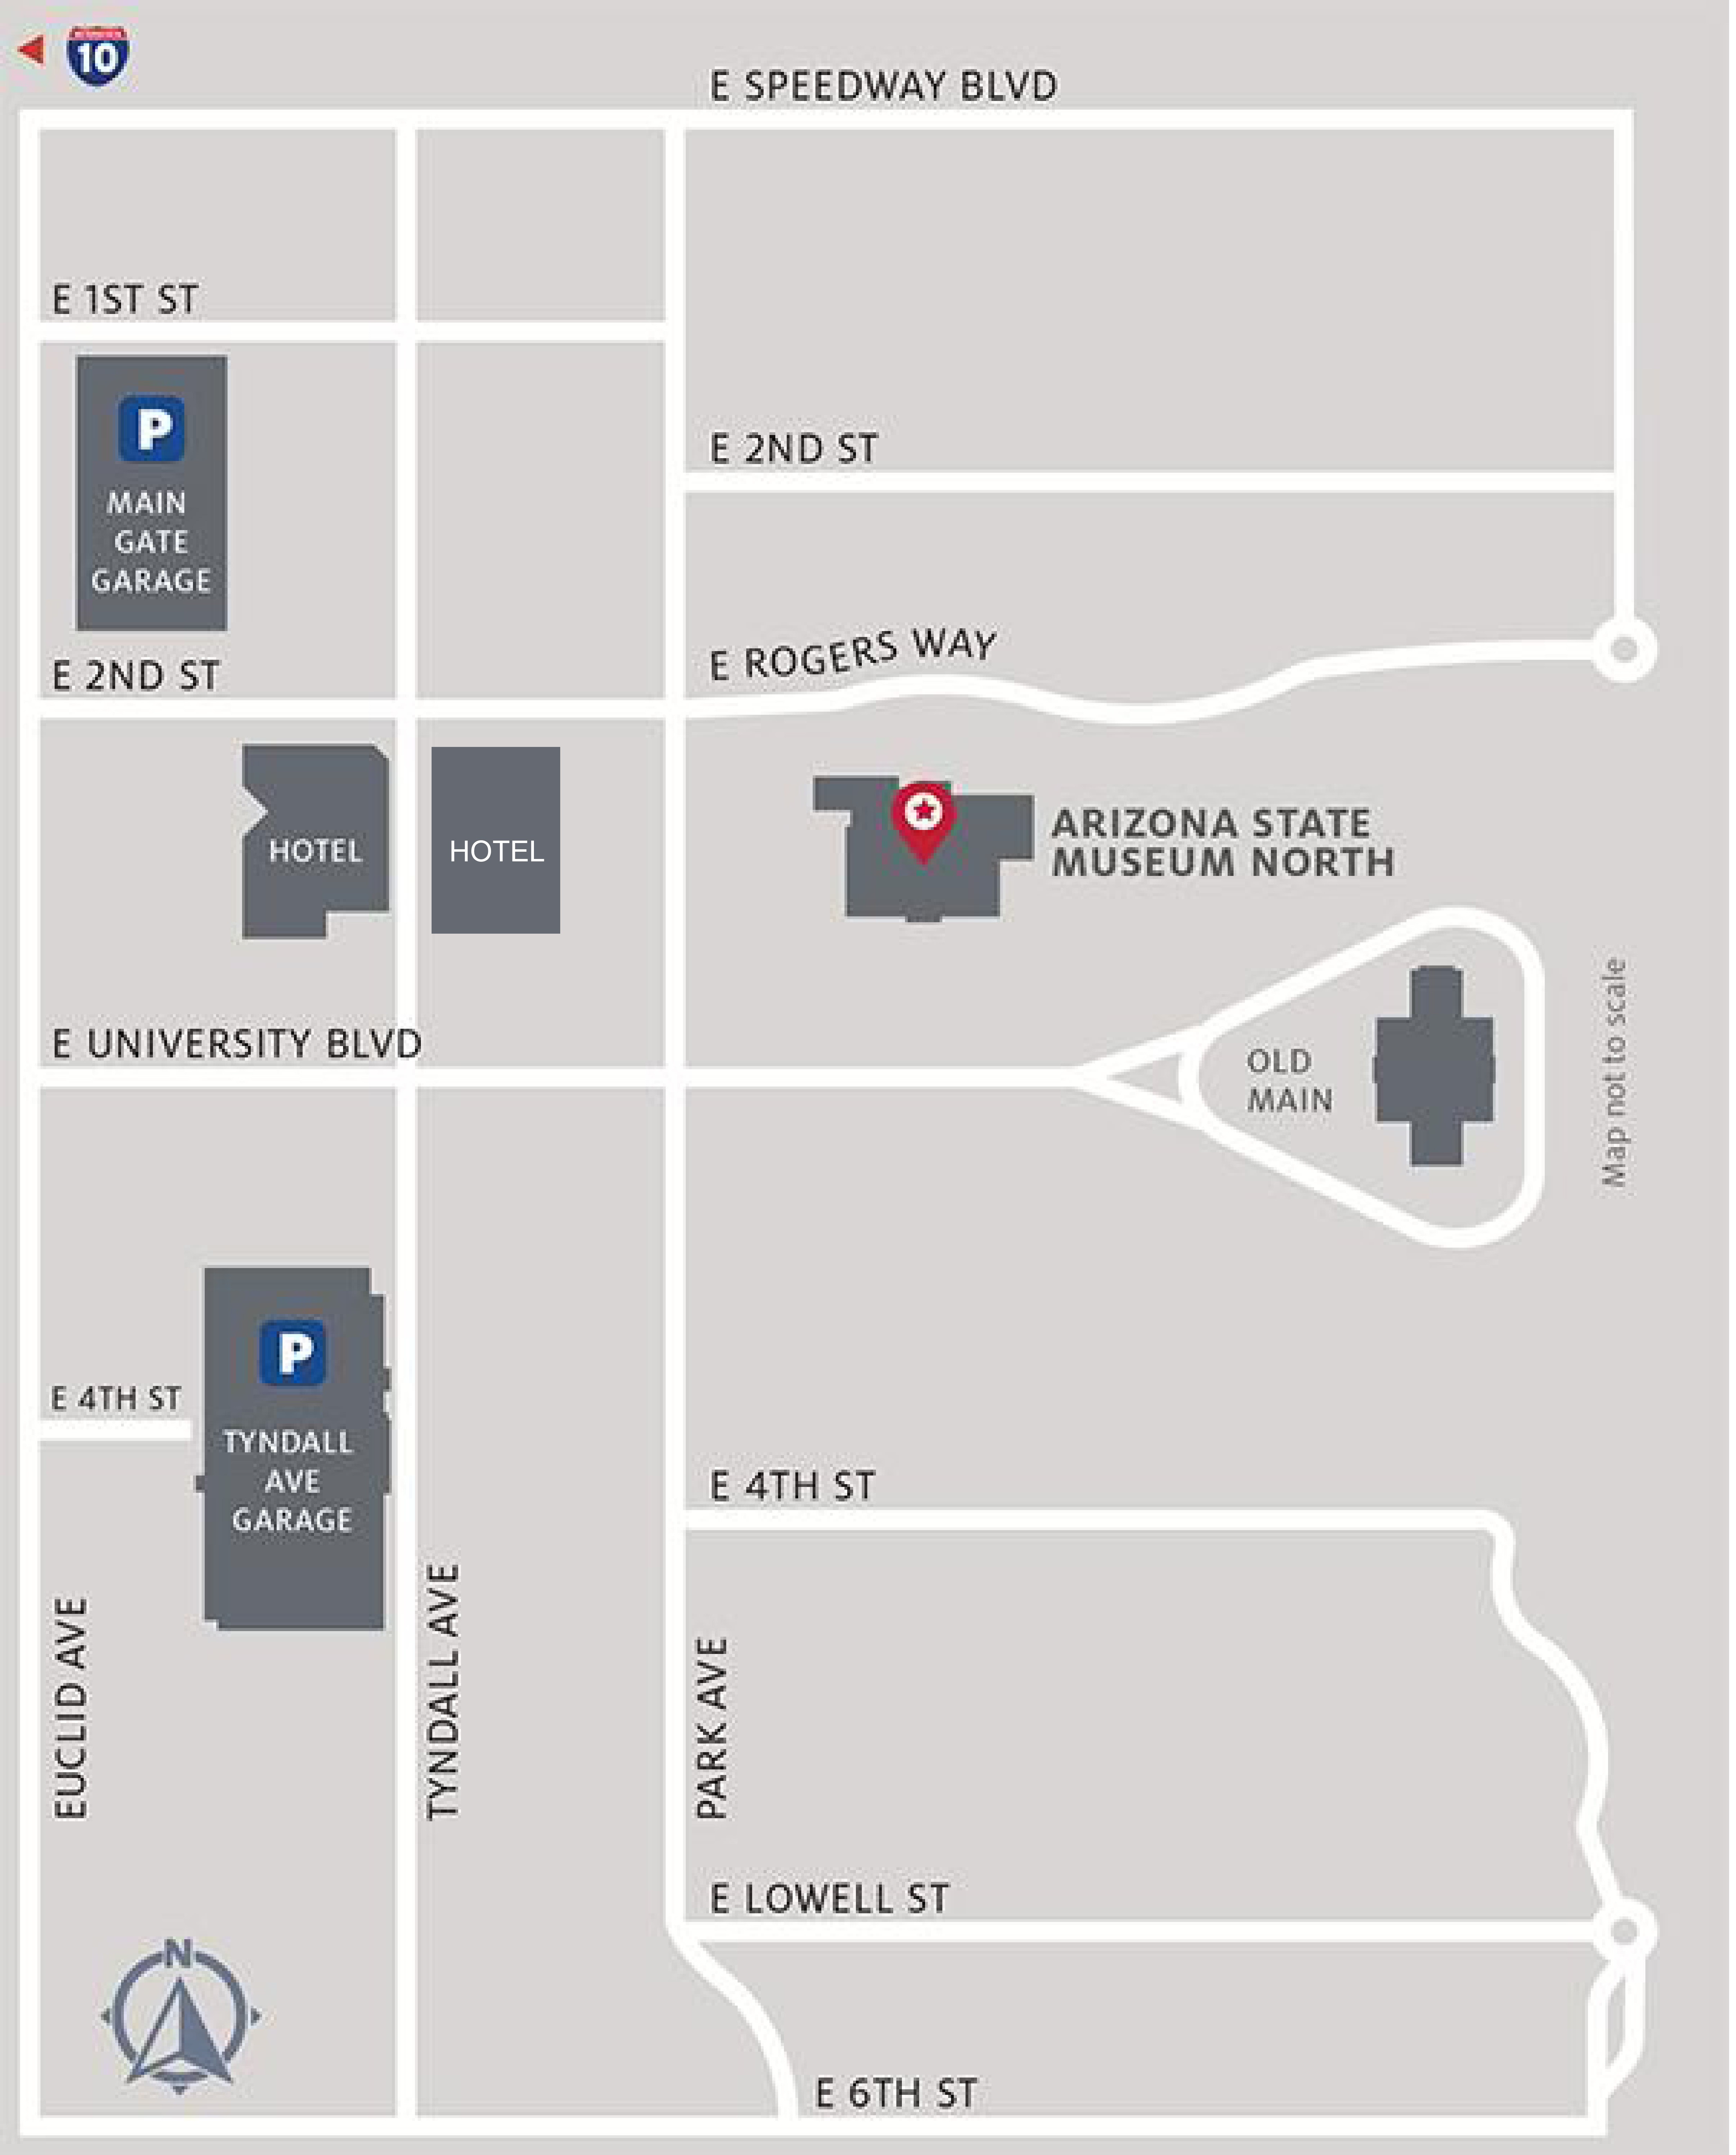 Campus Map highlighting the Arizona State Museum